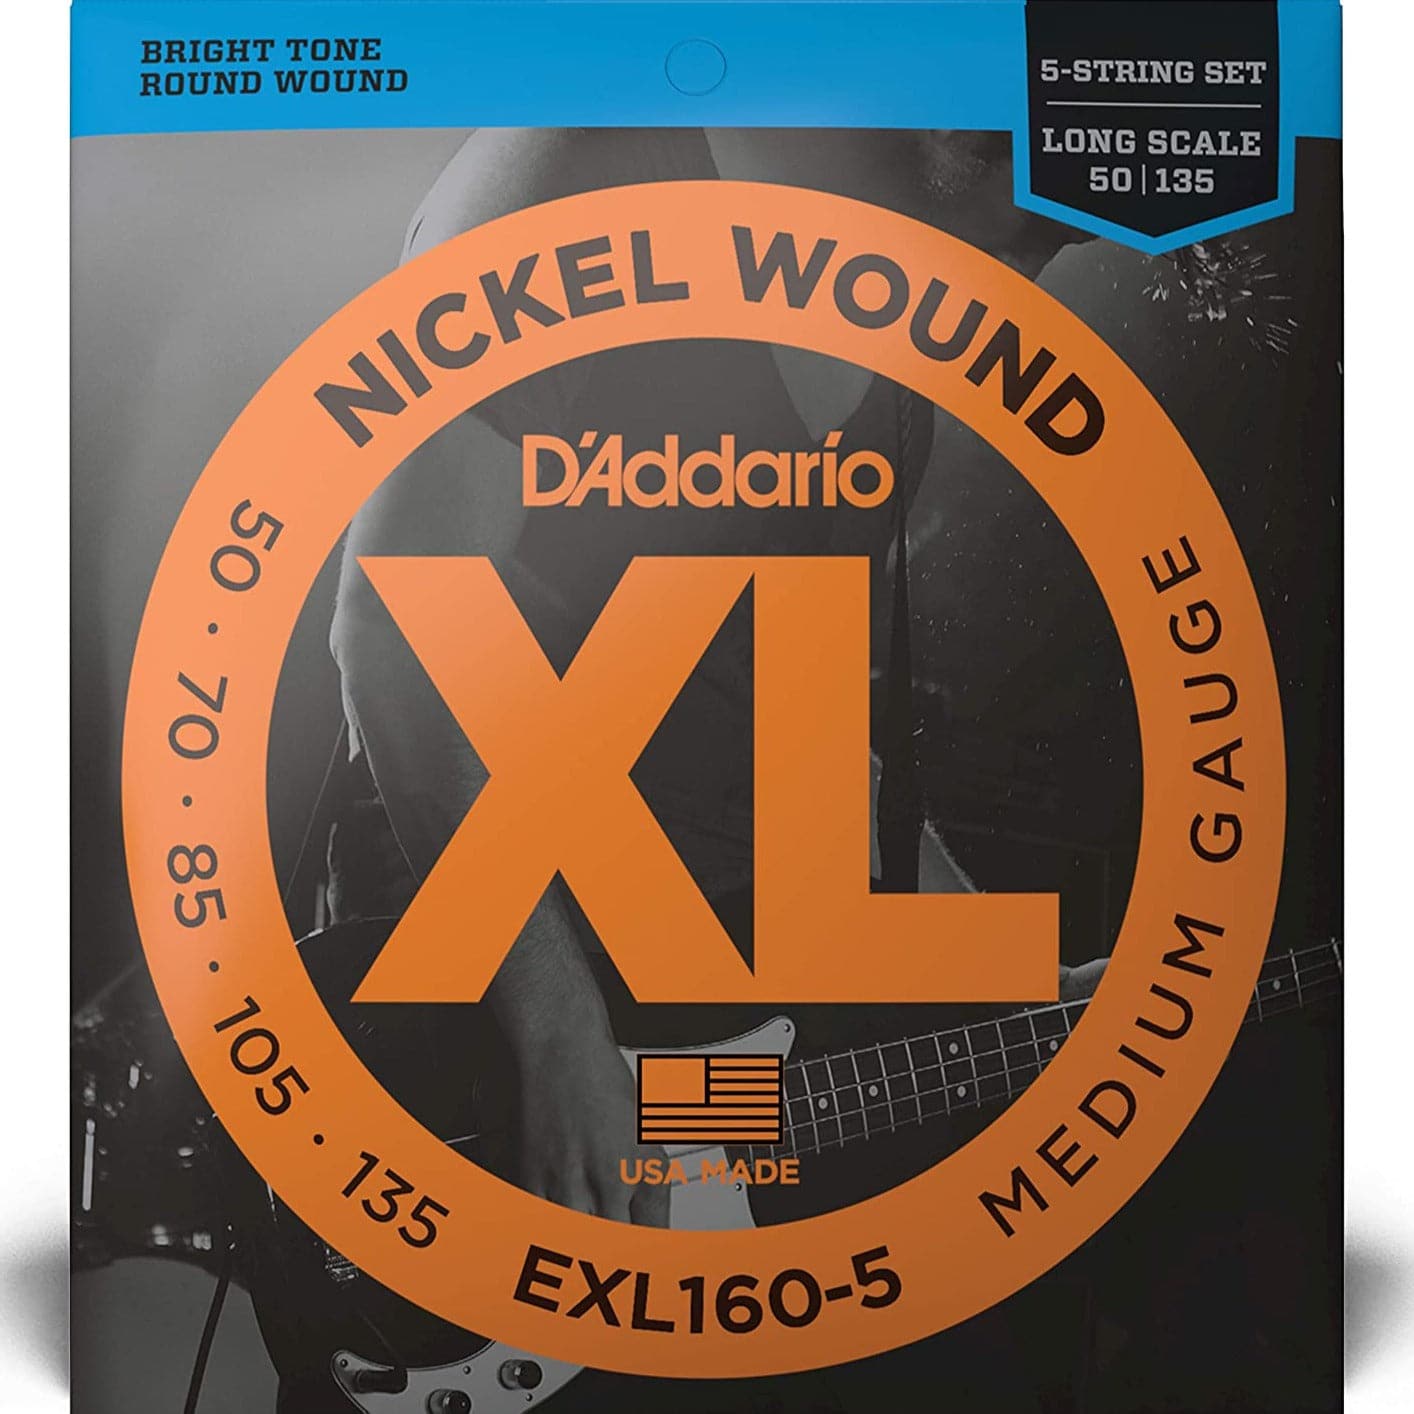 D'Addario EXL160-5 XL 5 String Bass Guitar Strings Long Scale Medium Gauge 50-135